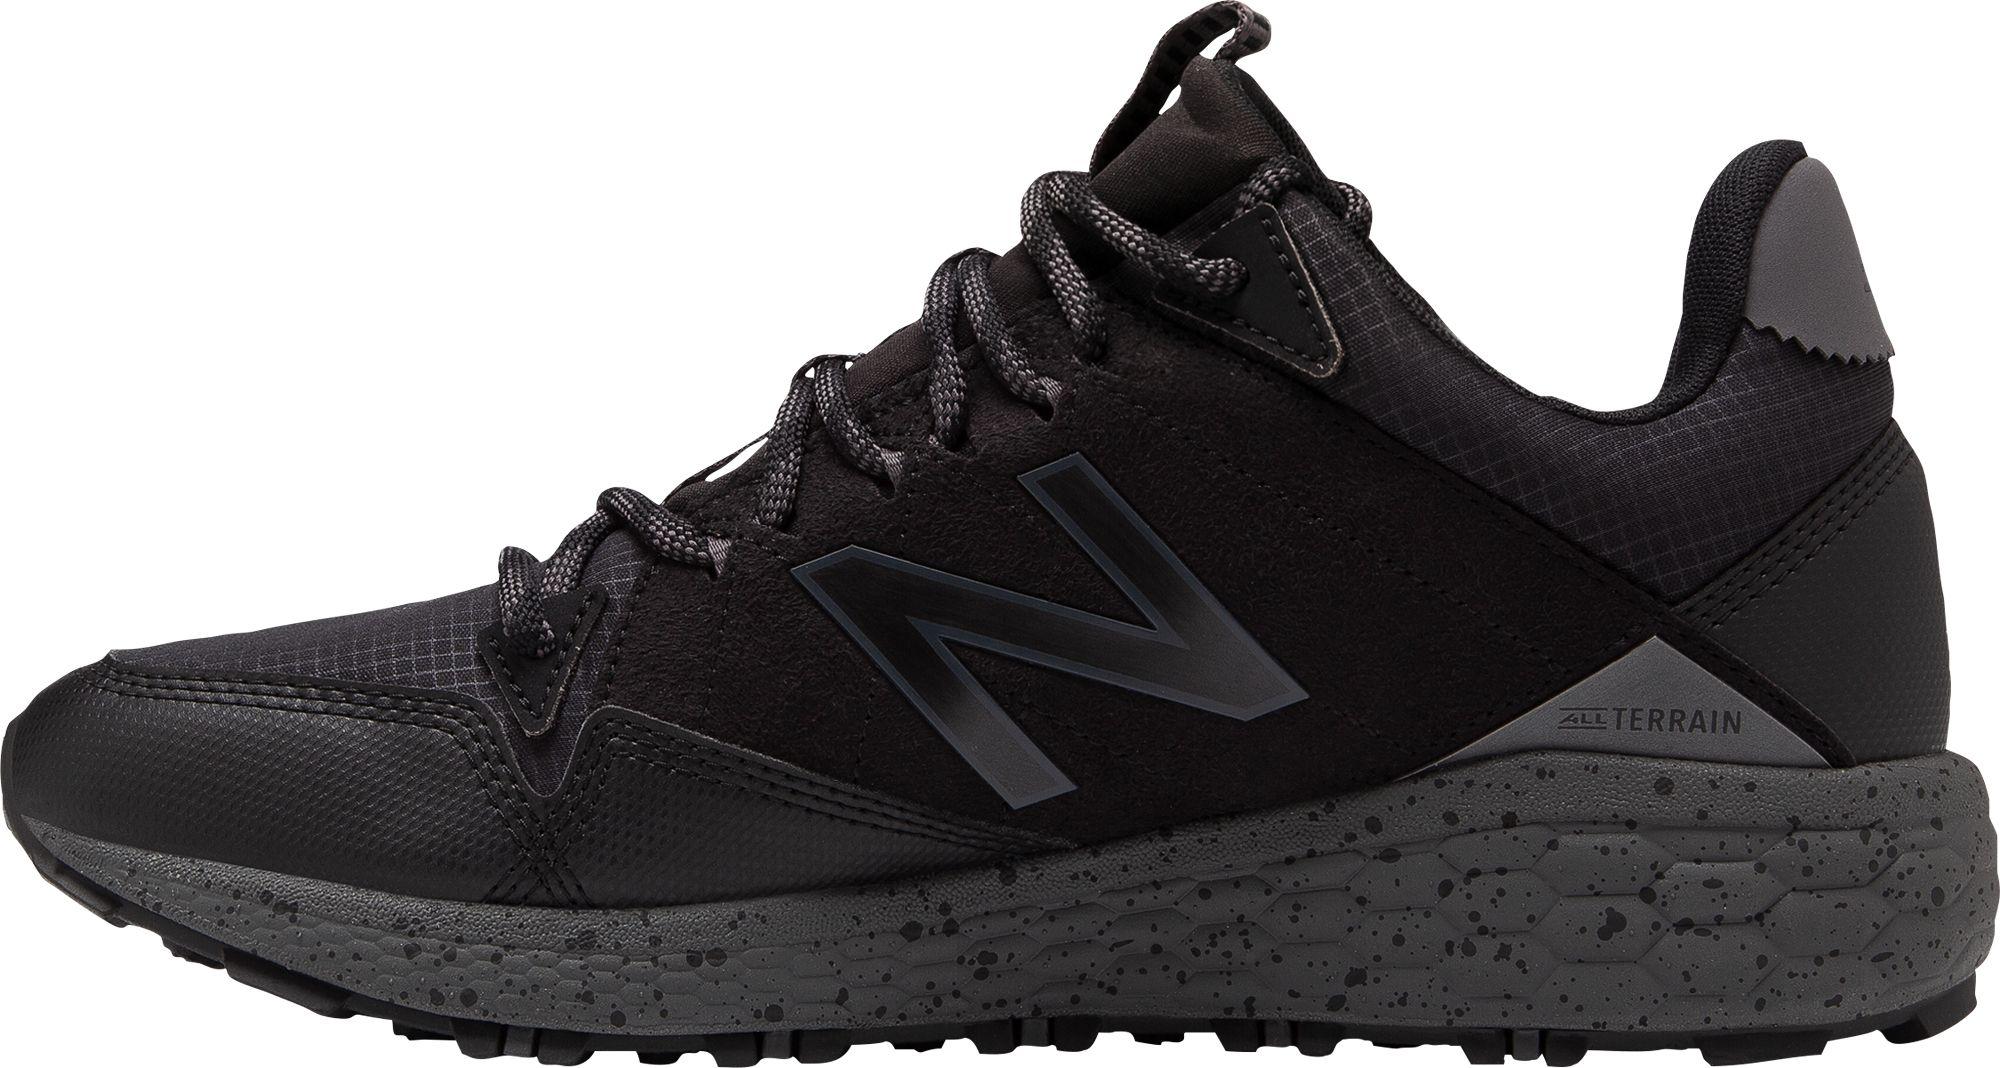 New Balance Rubber Crag V1 Fresh Foam Trail Running Shoes in Black/Grey ...